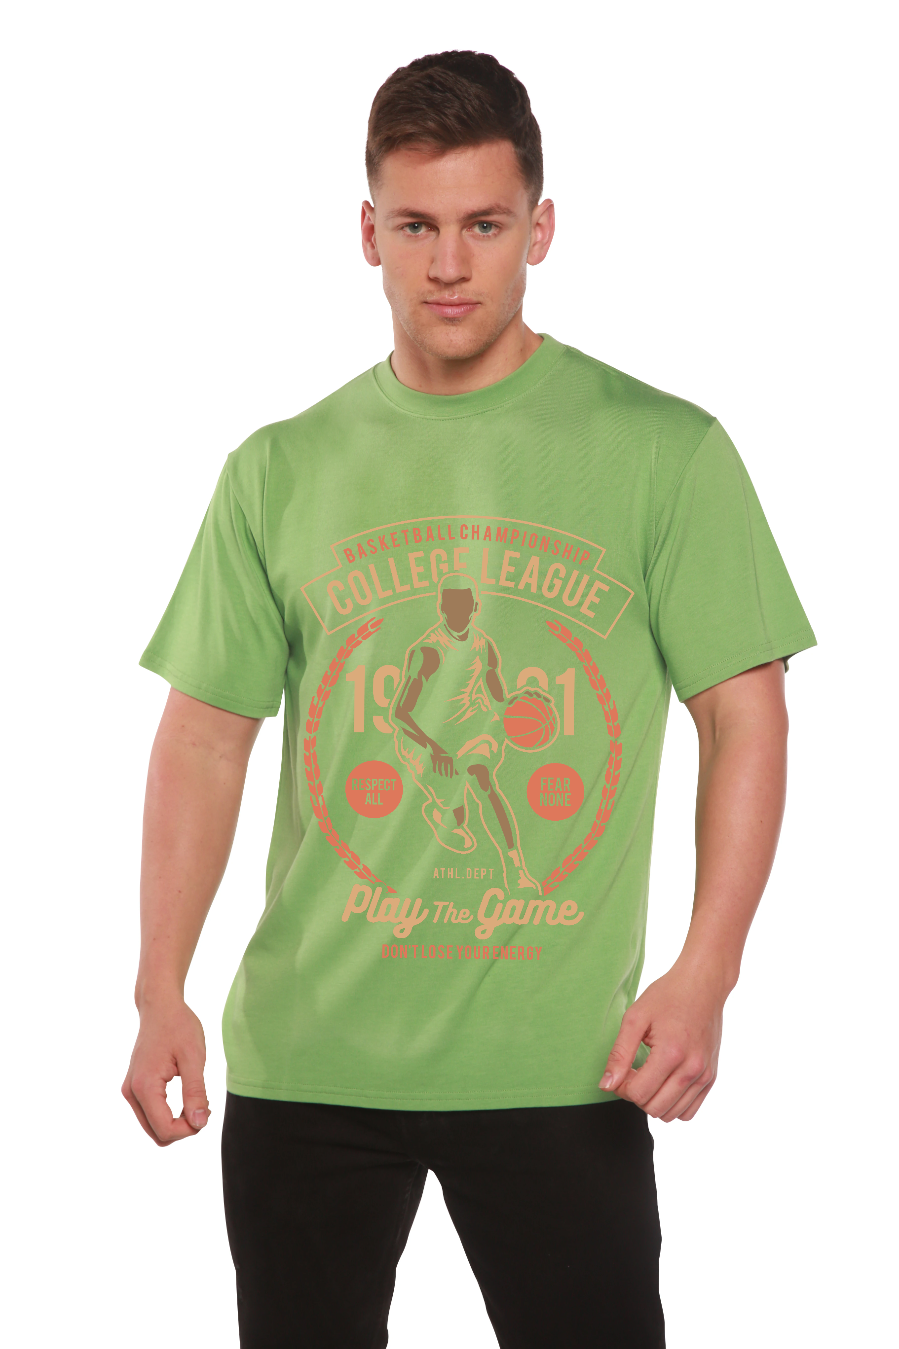 College League Men's Bamboo Viscose/Organic Cotton Short Sleeve T-Shirt - Spun Bamboo